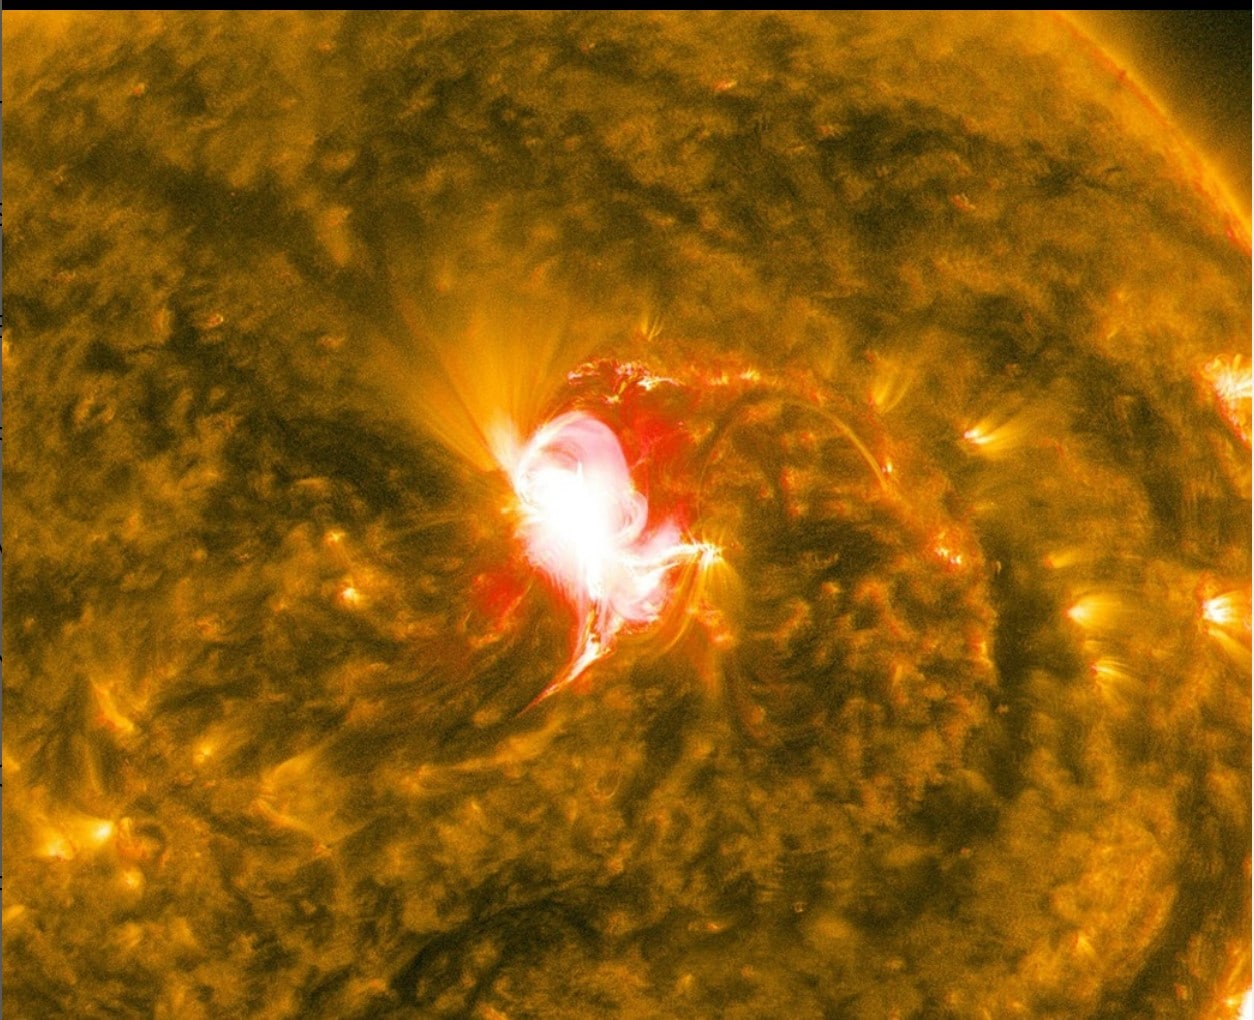 NASA Goddard's Solar Dynamics Observatory captured this medium-sized solar flare emerged in 2015.